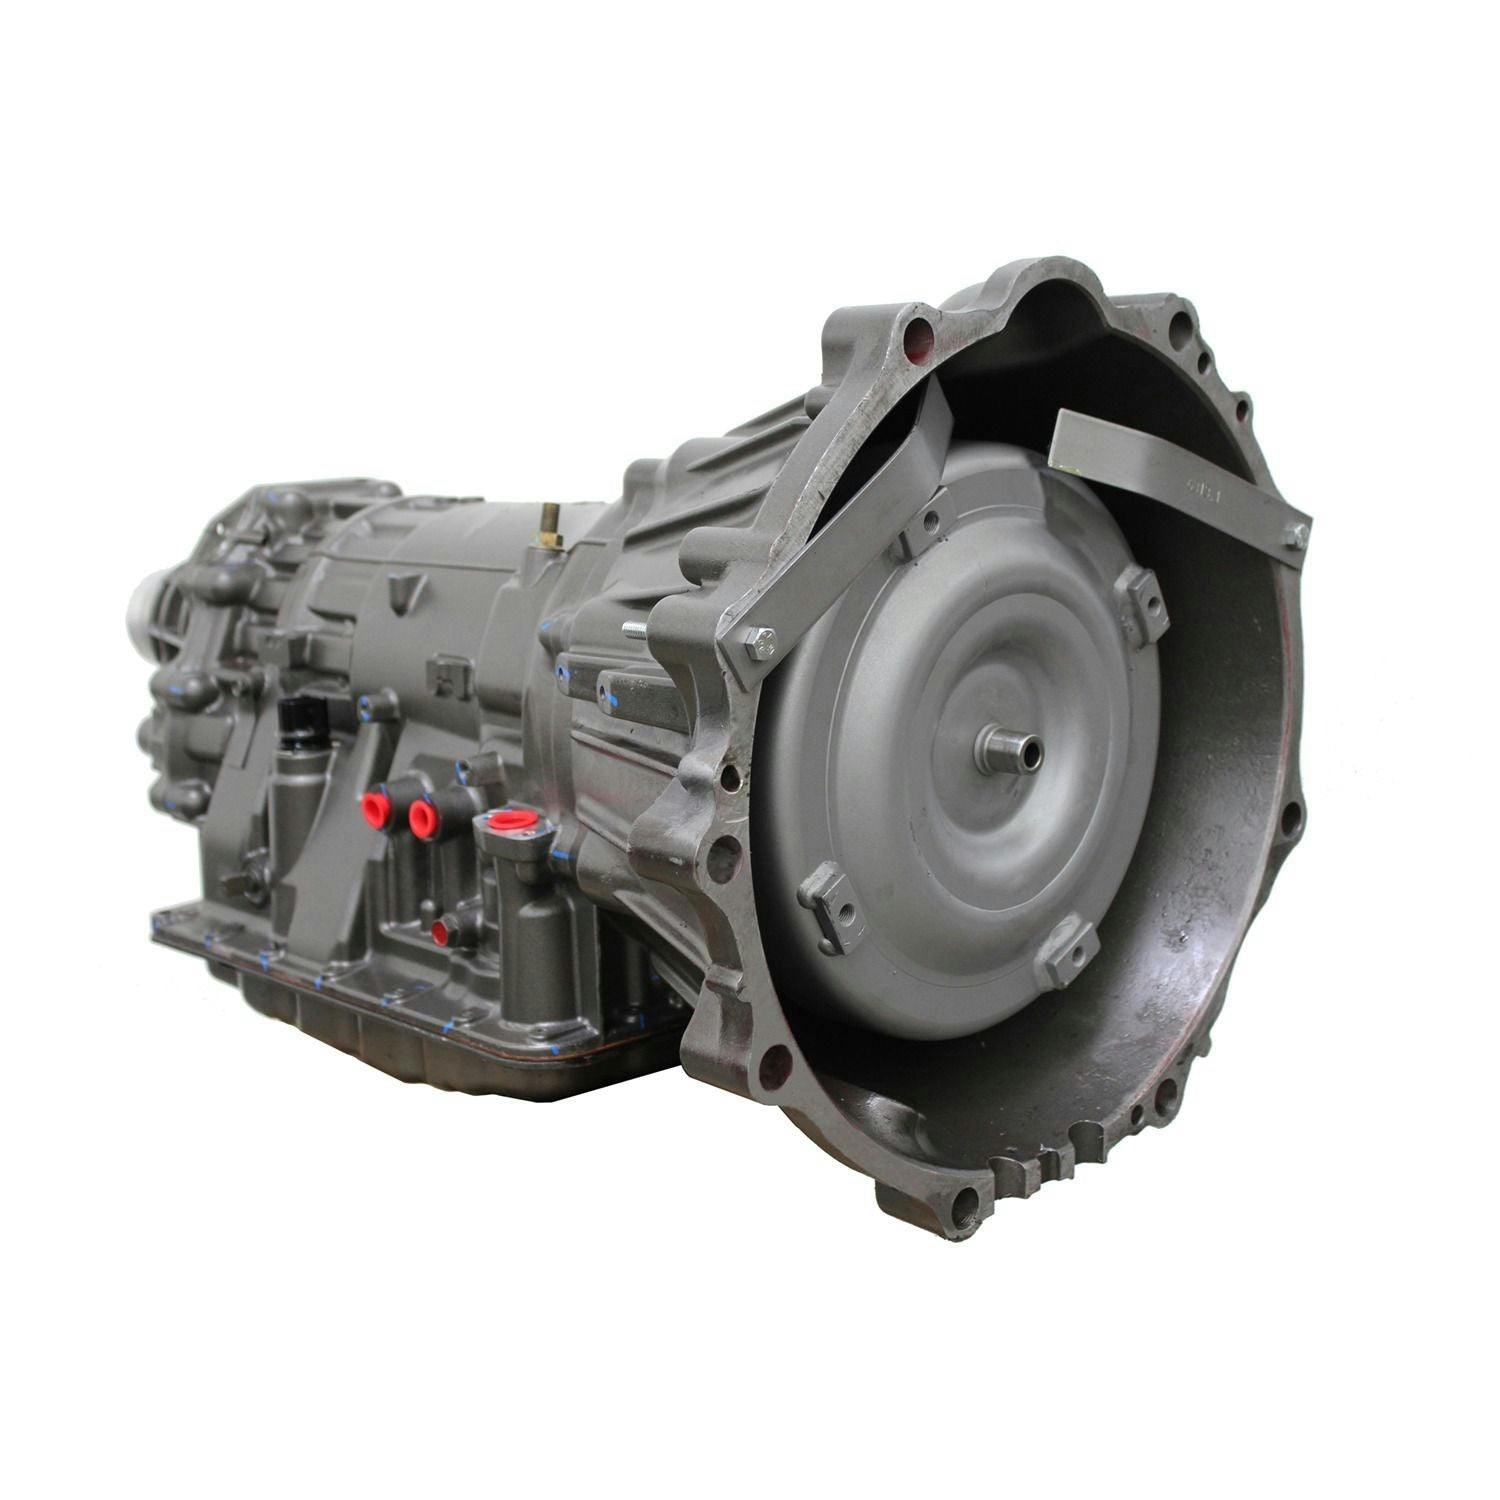 Automatic Transmission for 2005-2008 Nissan Armada/Infiniti QX56 RWD with 5.6L V8 Engine